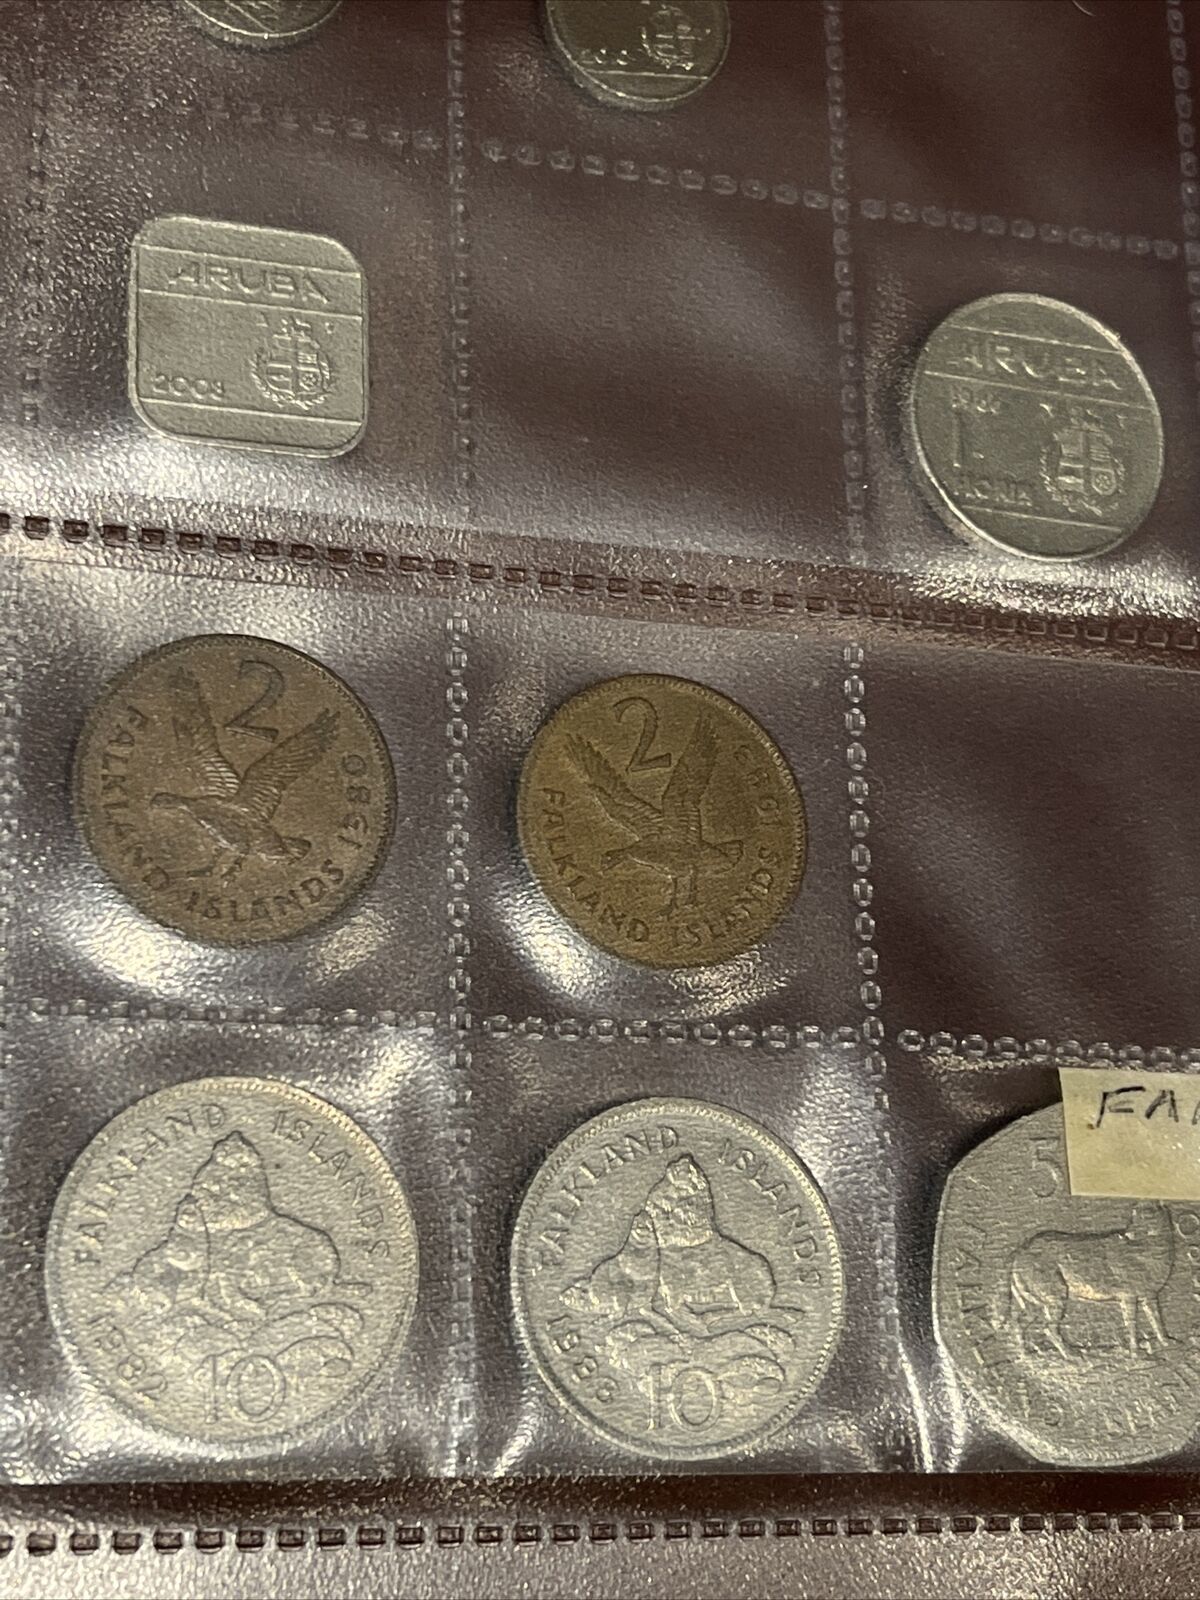 Falkland Islands, Arabia & Dominion Republic Coin Collection